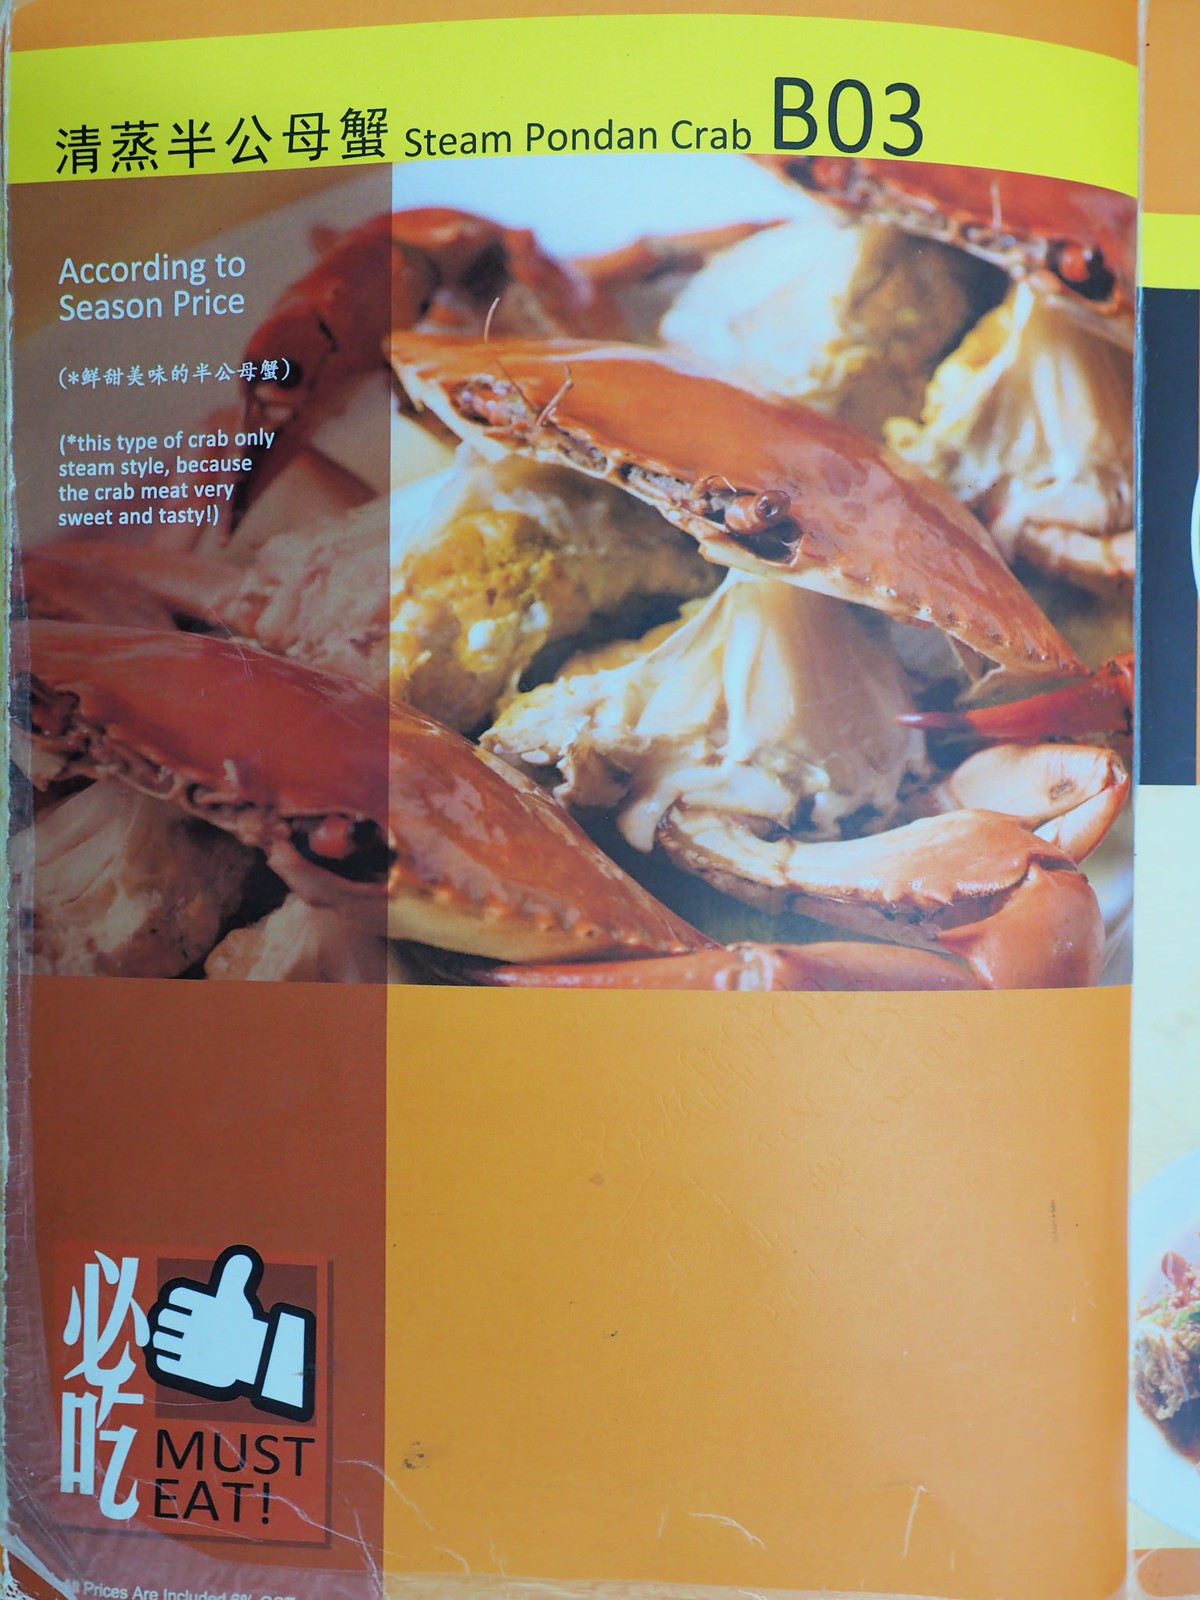 Steamed Pondan Crab from Pangkor Village Seafood, Taman Megah